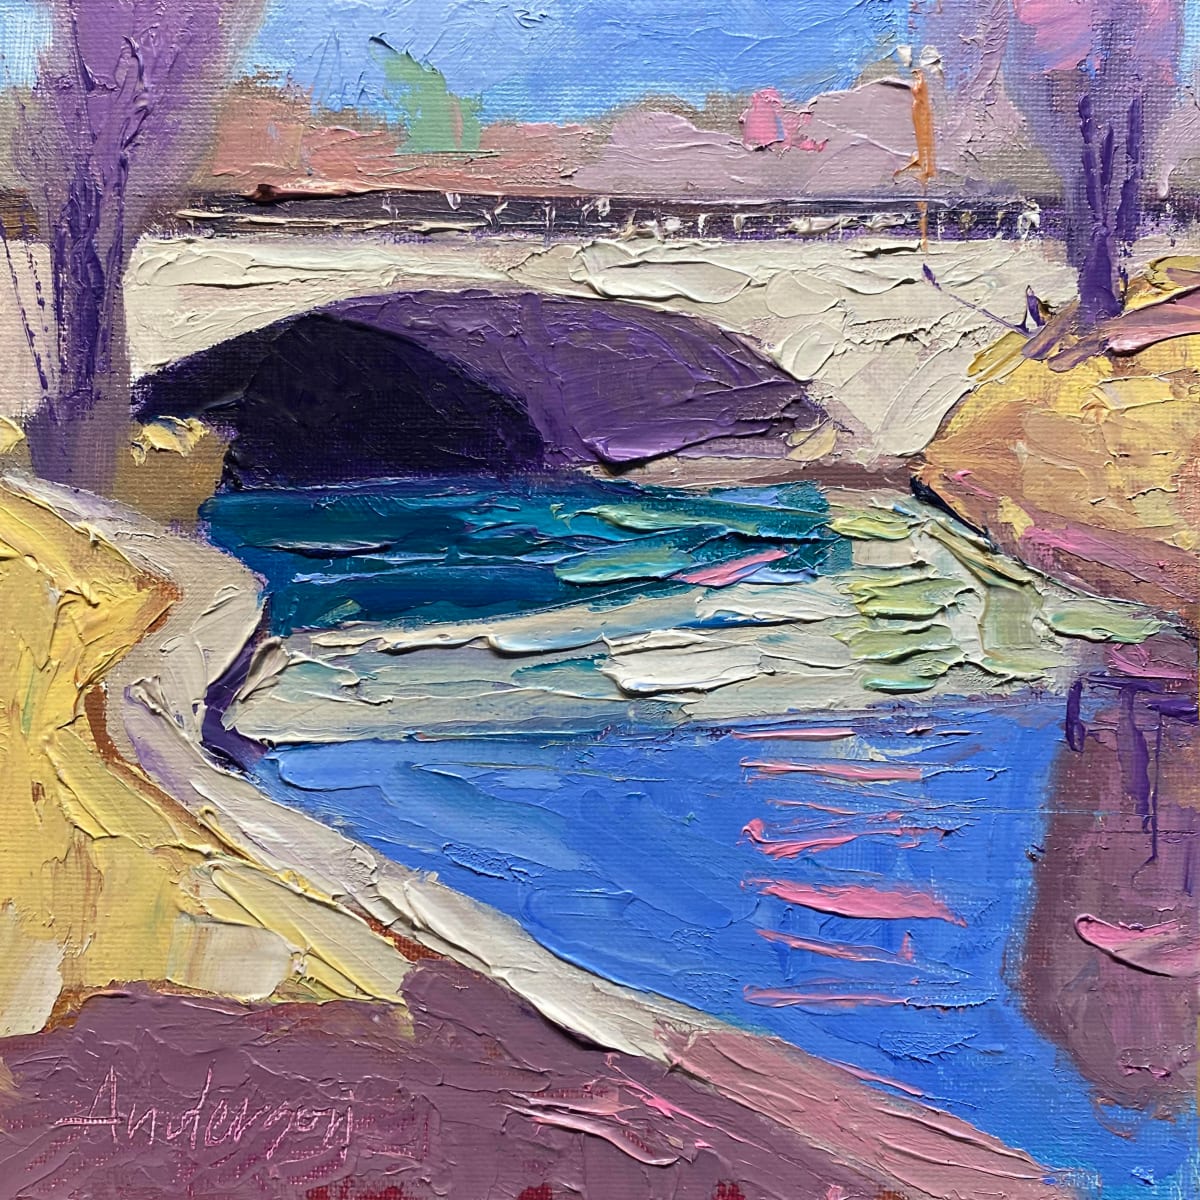 Bridge, December Morning by Michael Anderson 